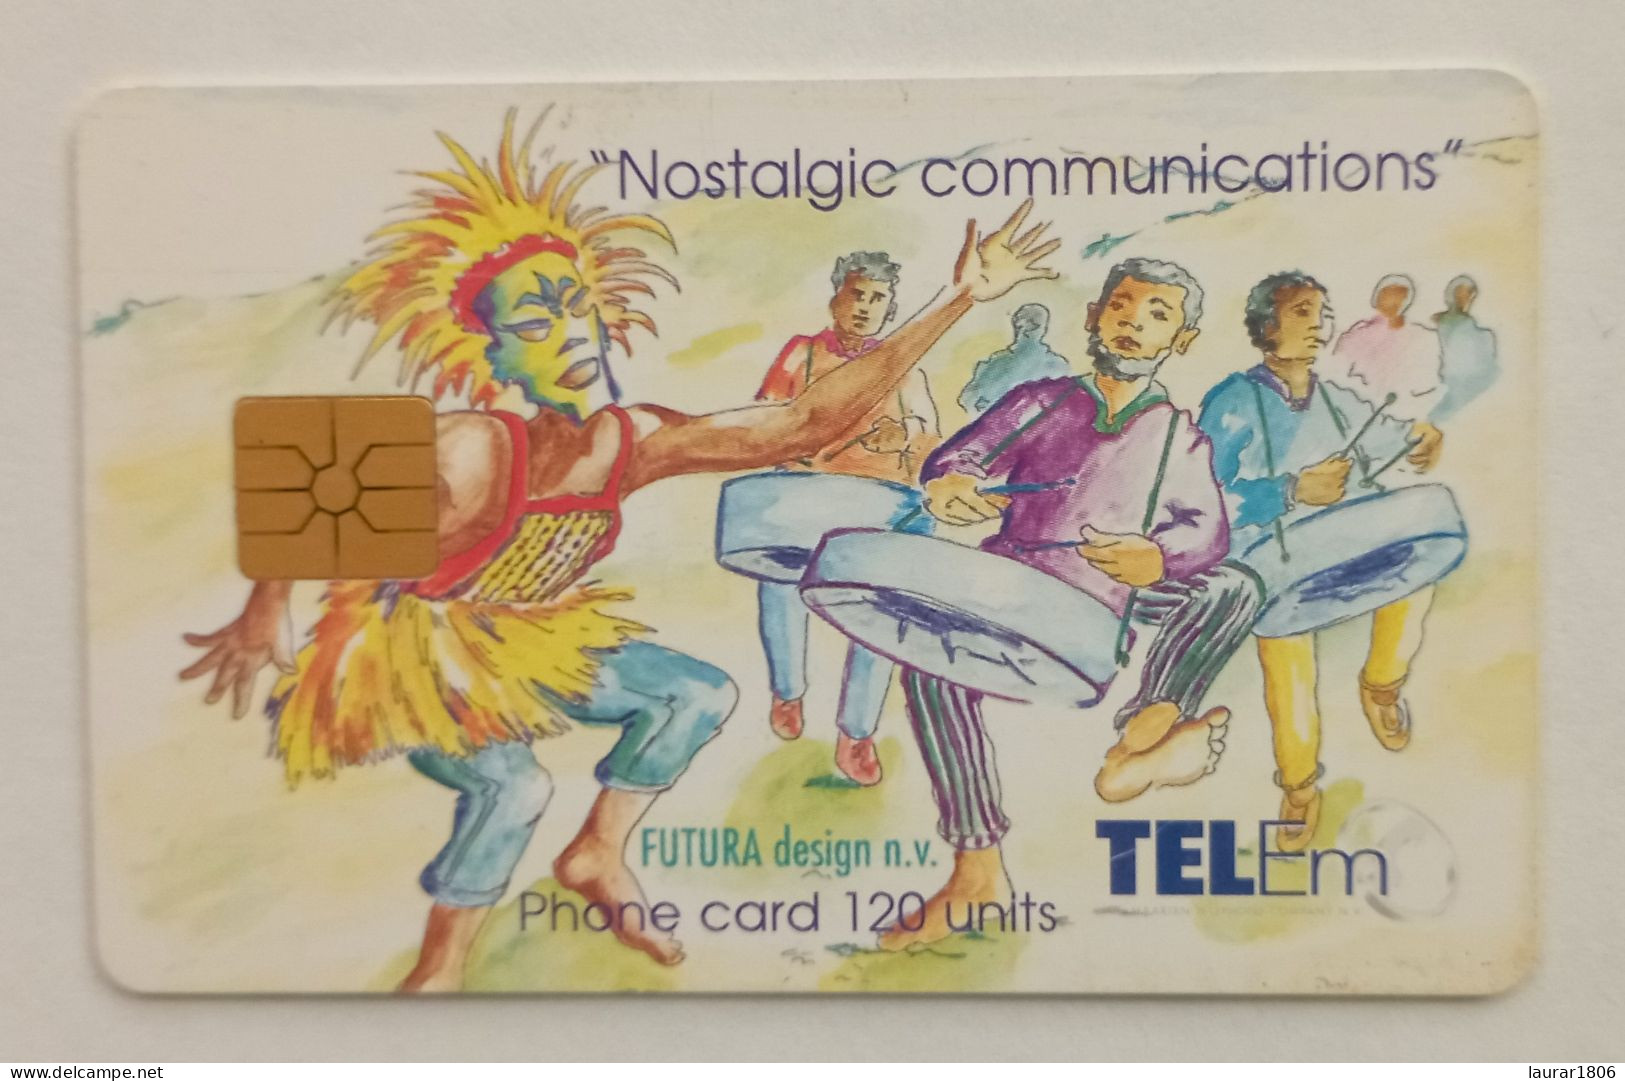 TELECARTE PHONECARD ANTILLES NEERLANDAISES - TEL-EM N.V. - GEM1B White - NOSTALGIC COMMUNICATIONS - 120 Unités - EC - Antilles (Netherlands)